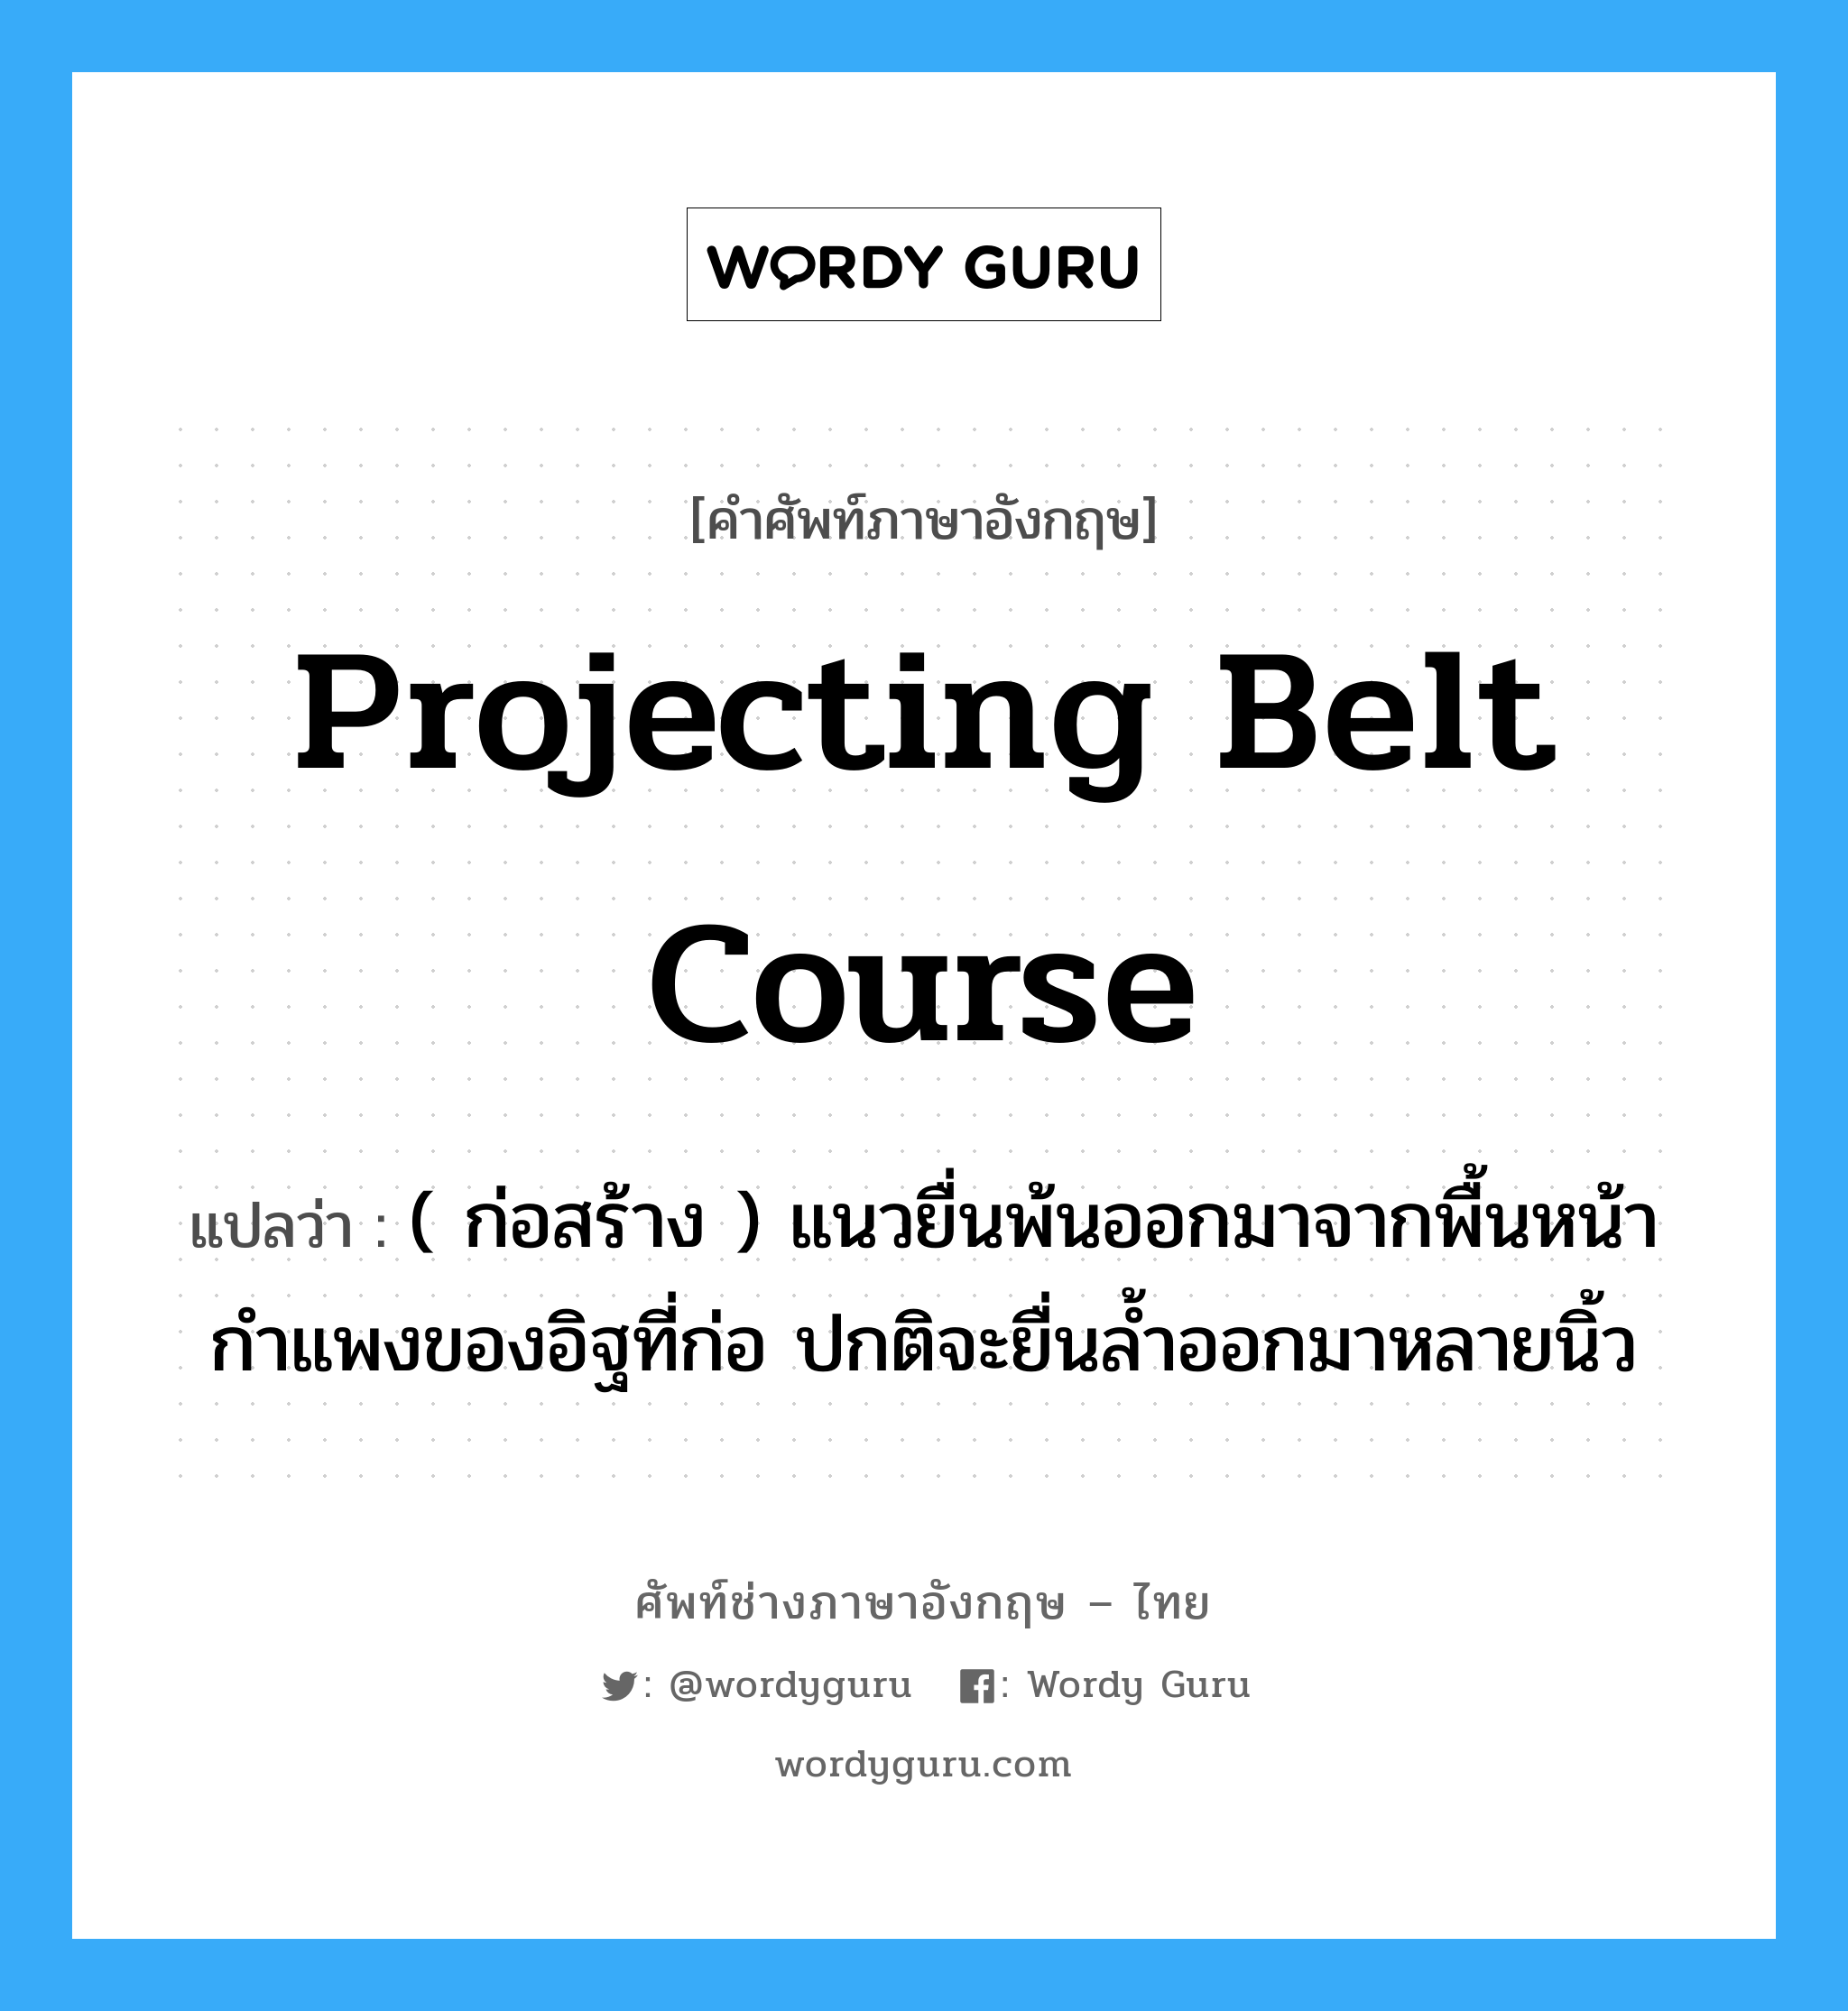 projecting belt course แปลว่า?, คำศัพท์ช่างภาษาอังกฤษ - ไทย projecting belt course คำศัพท์ภาษาอังกฤษ projecting belt course แปลว่า ( ก่อสร้าง ) แนวยื่นพ้นออกมาจากพื้นหน้ากำแพงของอิฐที่ก่อ ปกติจะยื่นล้ำออกมาหลายนิ้ว